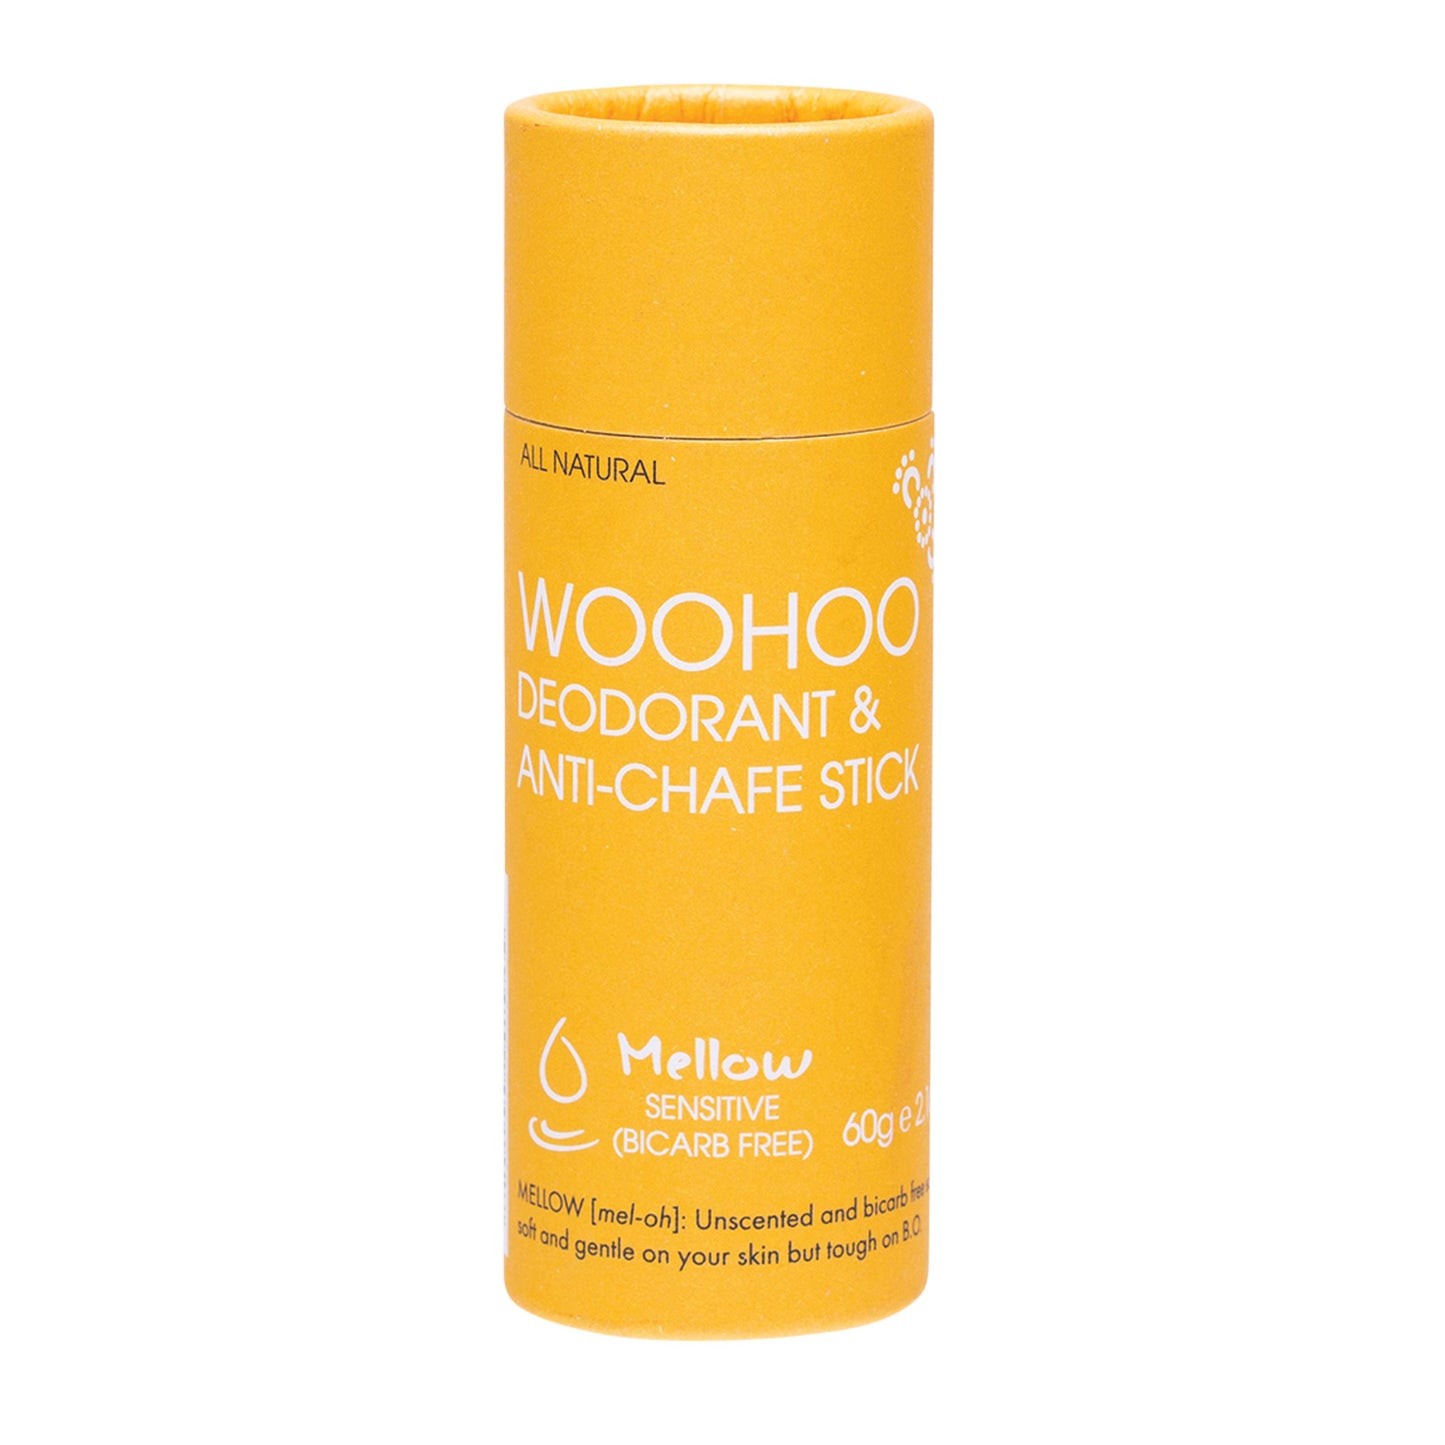 Woohoo Body vegan zero waste all natural deodorant. Yellow cardboard tube on a white background.